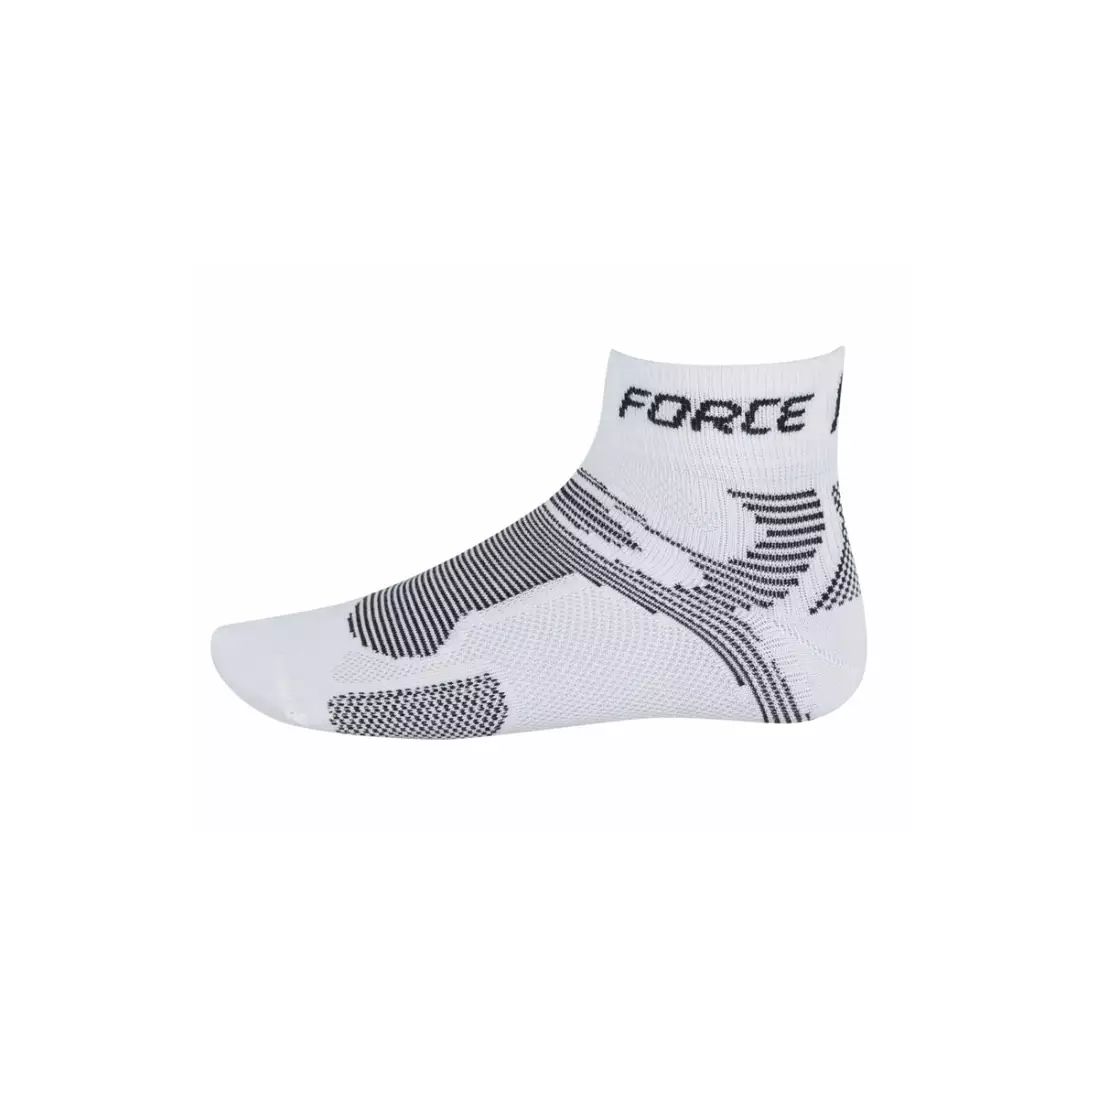 FORCE 2 COOLMAX 901022 sports socks - white and black